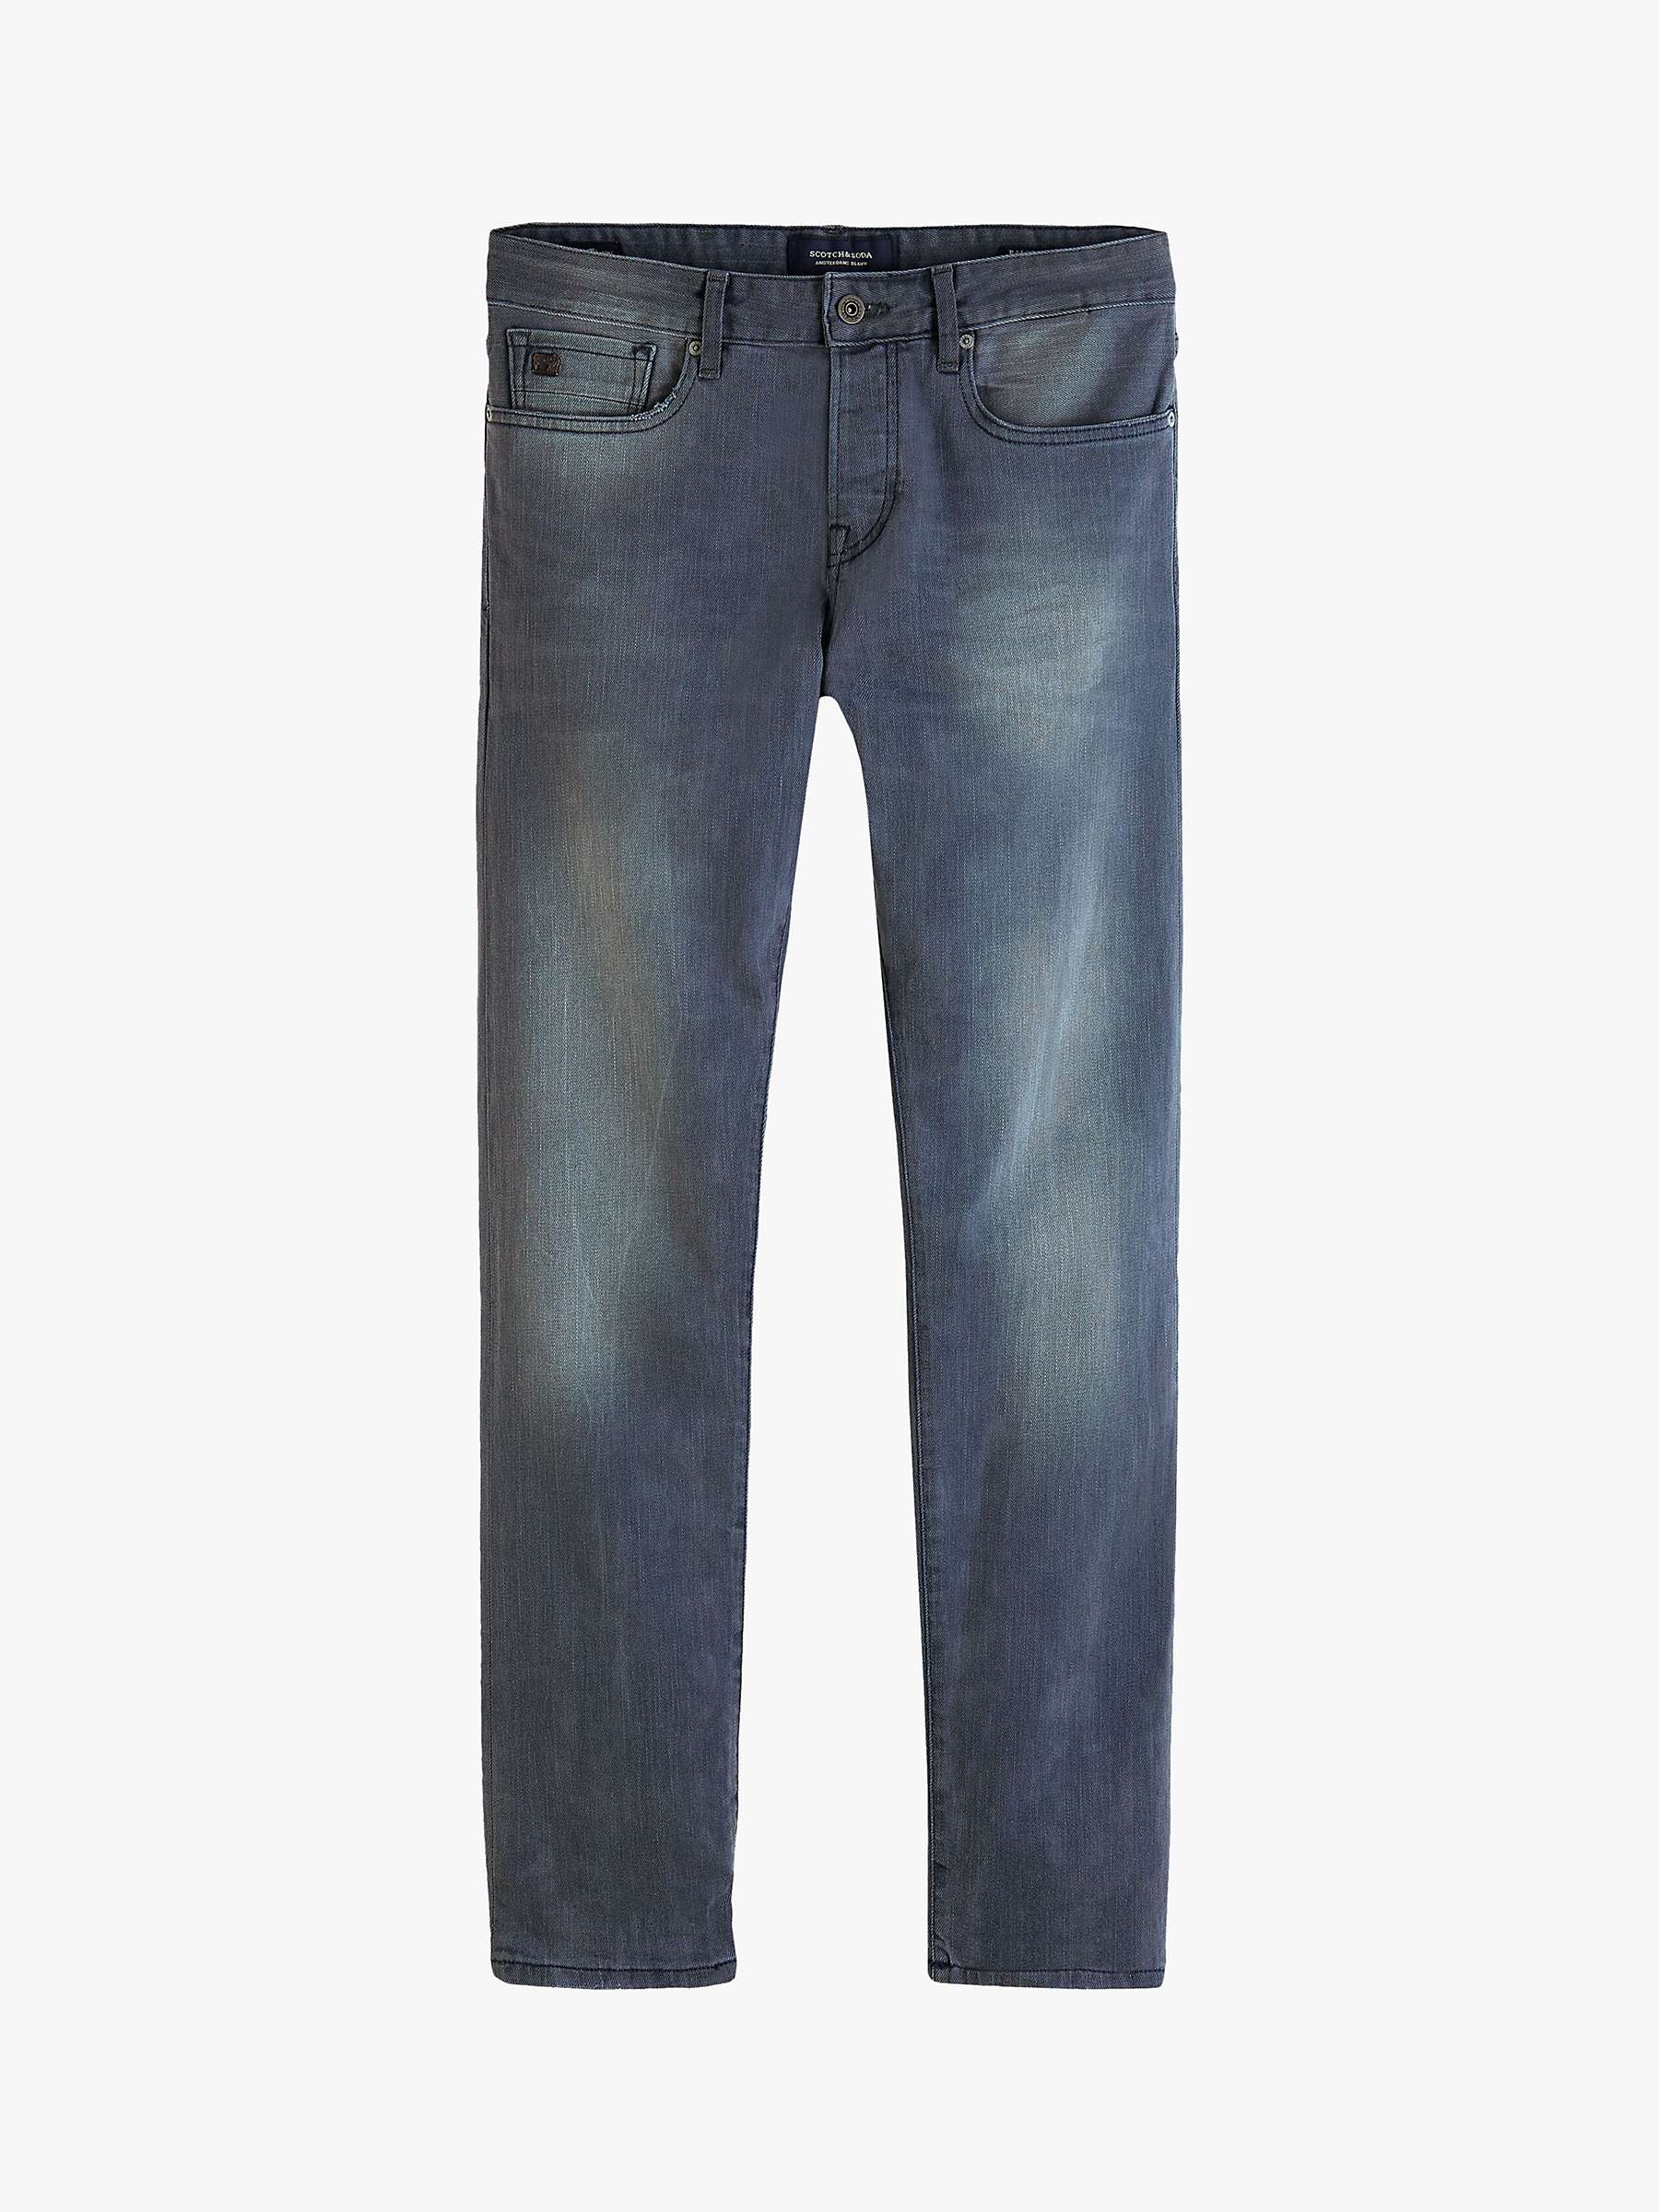 Buy Scotch & Soda Ralston Slim Fit Jeans, Concrete Bleach Online at johnlewis.com